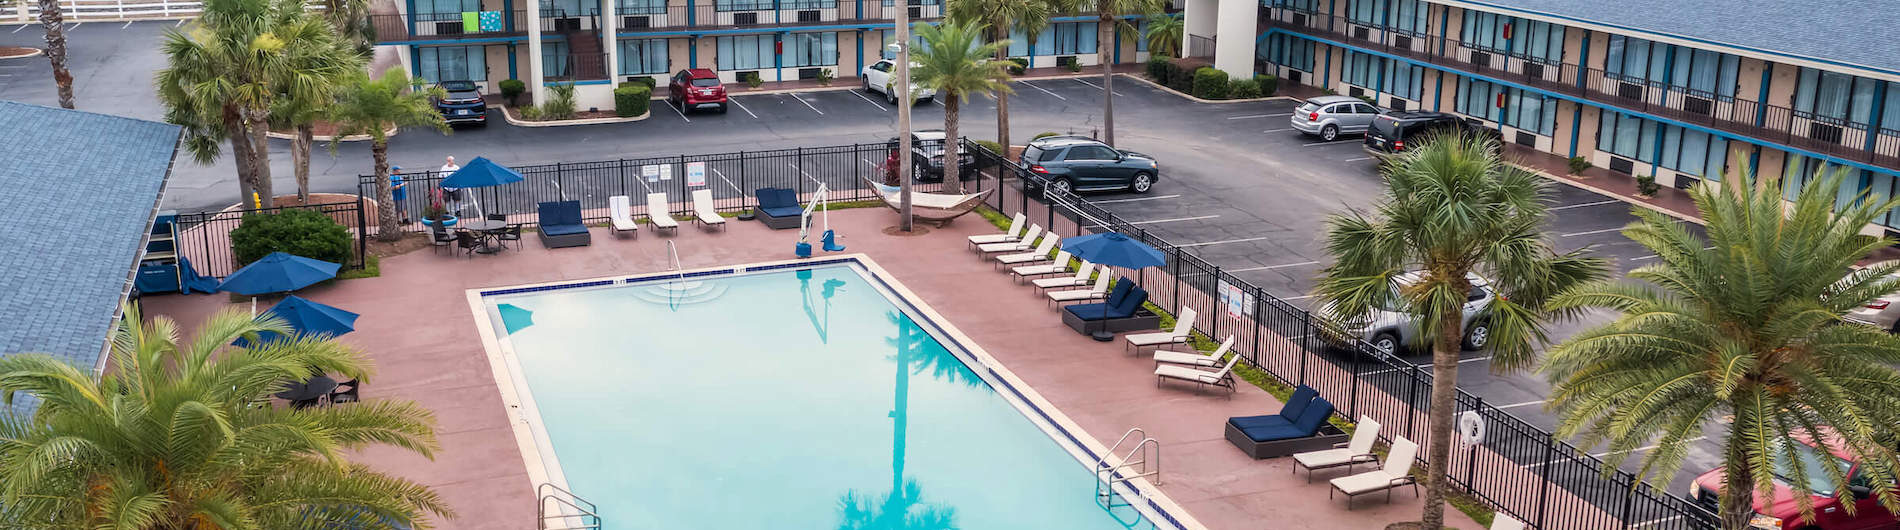 Ocean Coast Hotel at the Beach Amelia Island pool